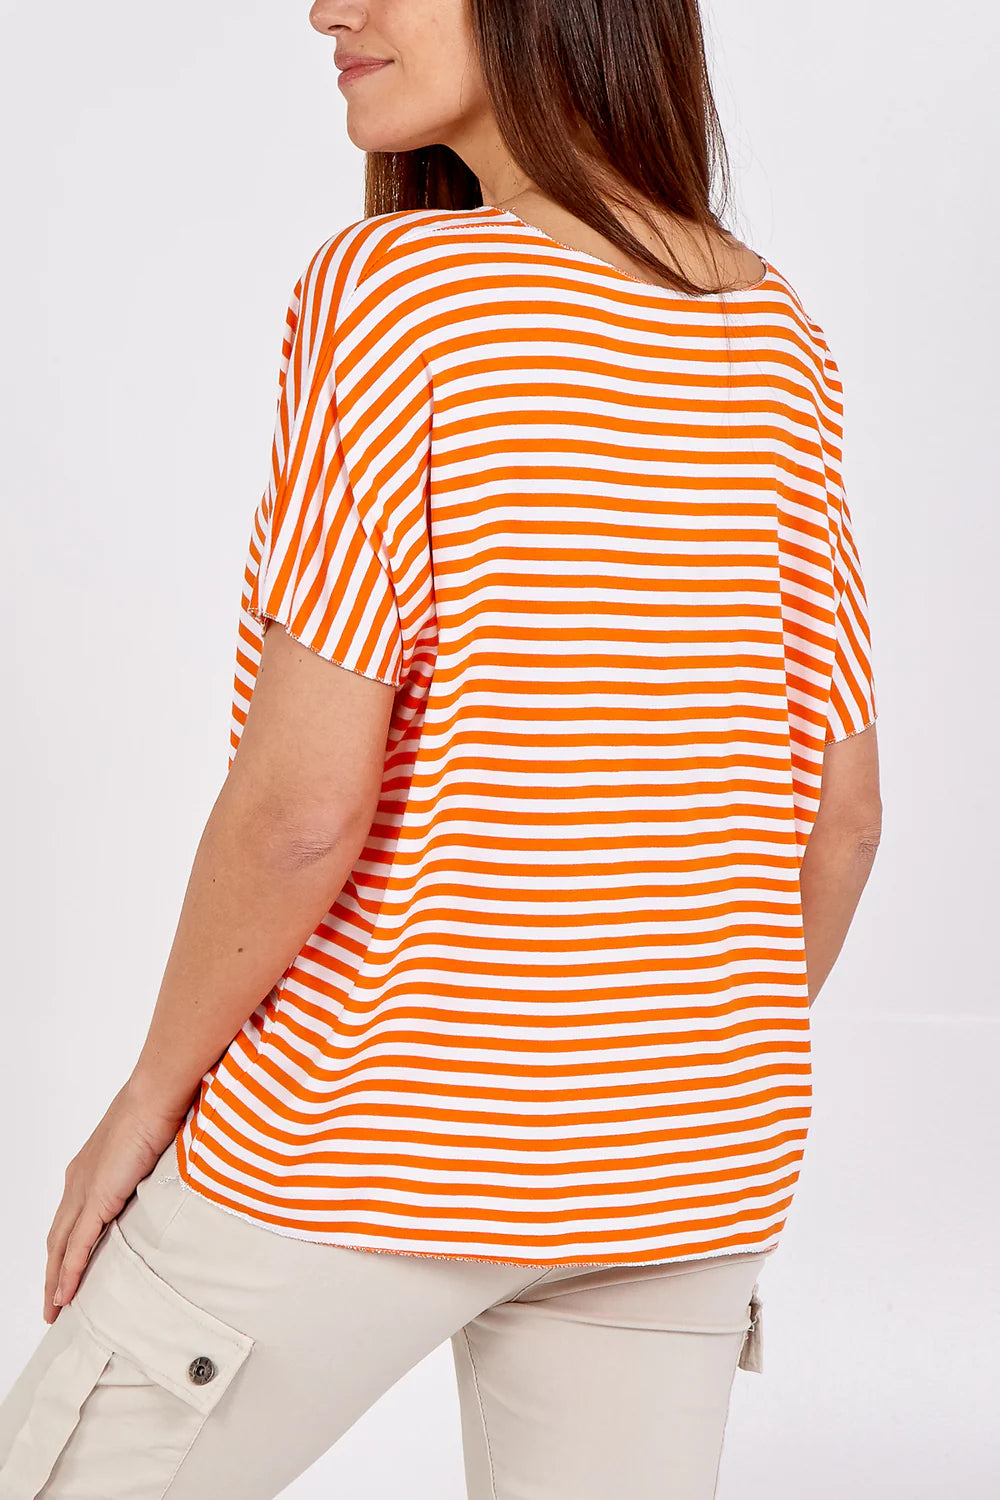 Stripe V-Neck T-shirt - Orange